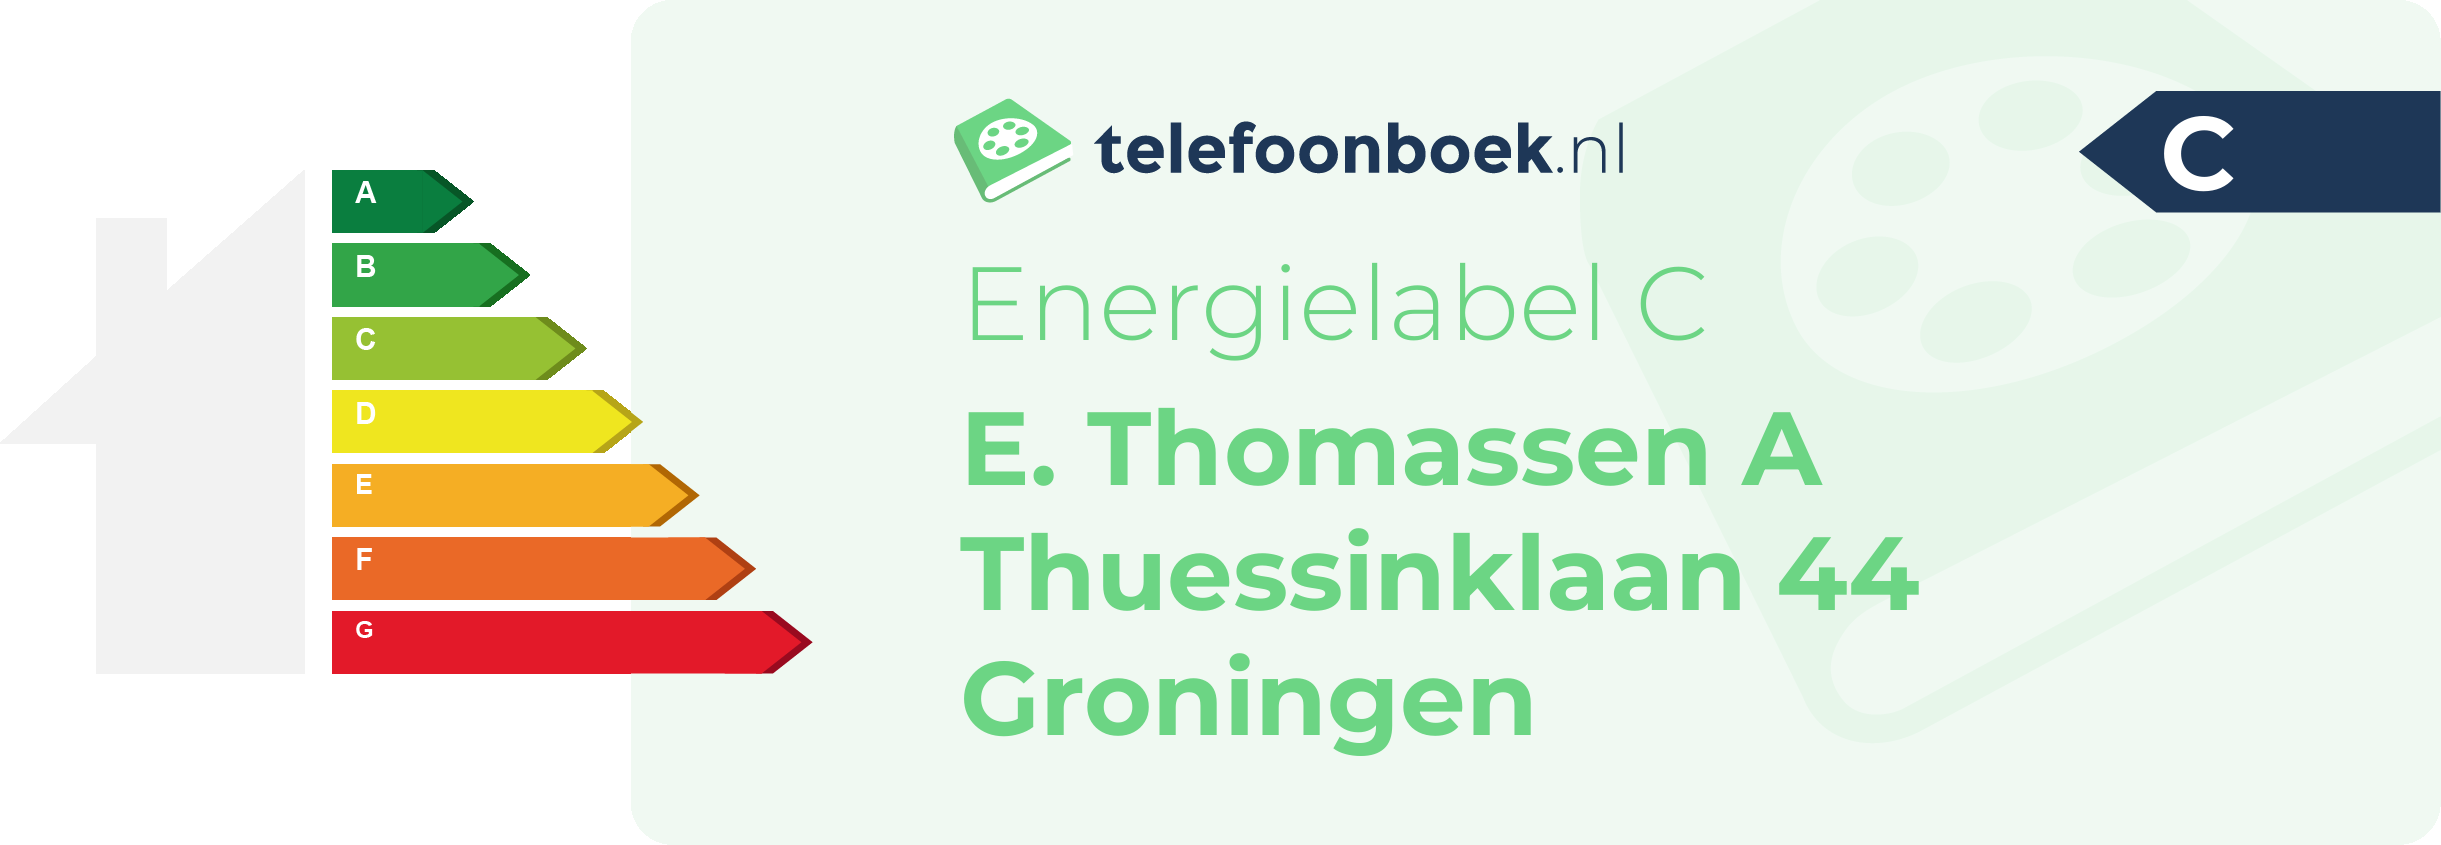 Energielabel E. Thomassen A Thuessinklaan 44 Groningen